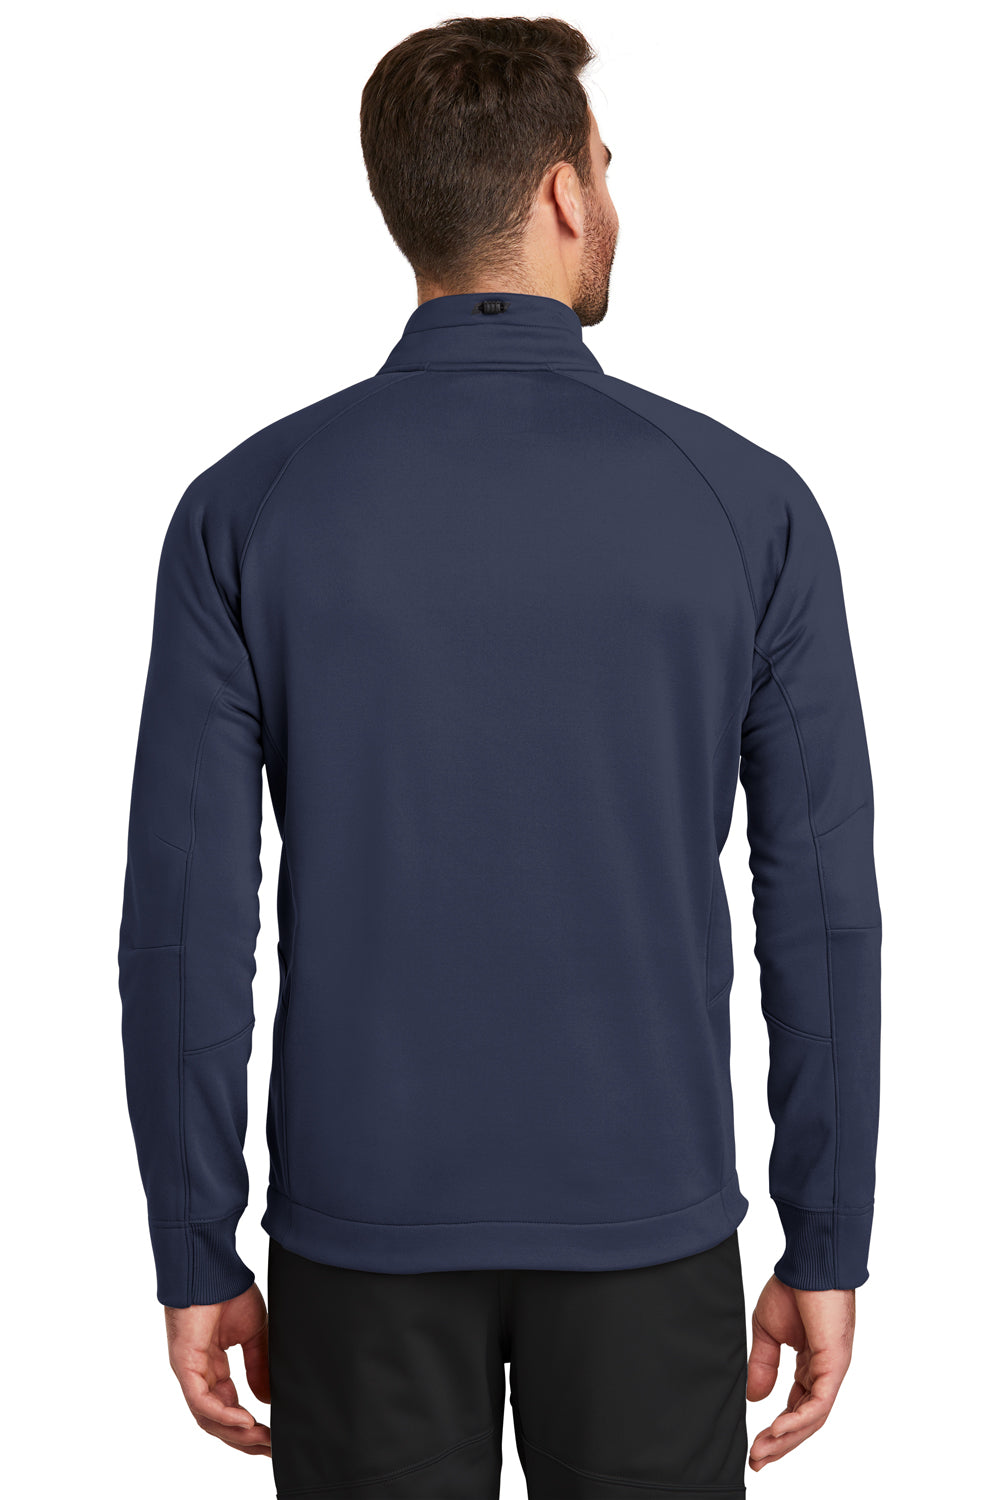 New Era NEA523 Mens Venue Moisture Wicking Fleece 1/4 Zip Sweatshirt Navy Blue Back